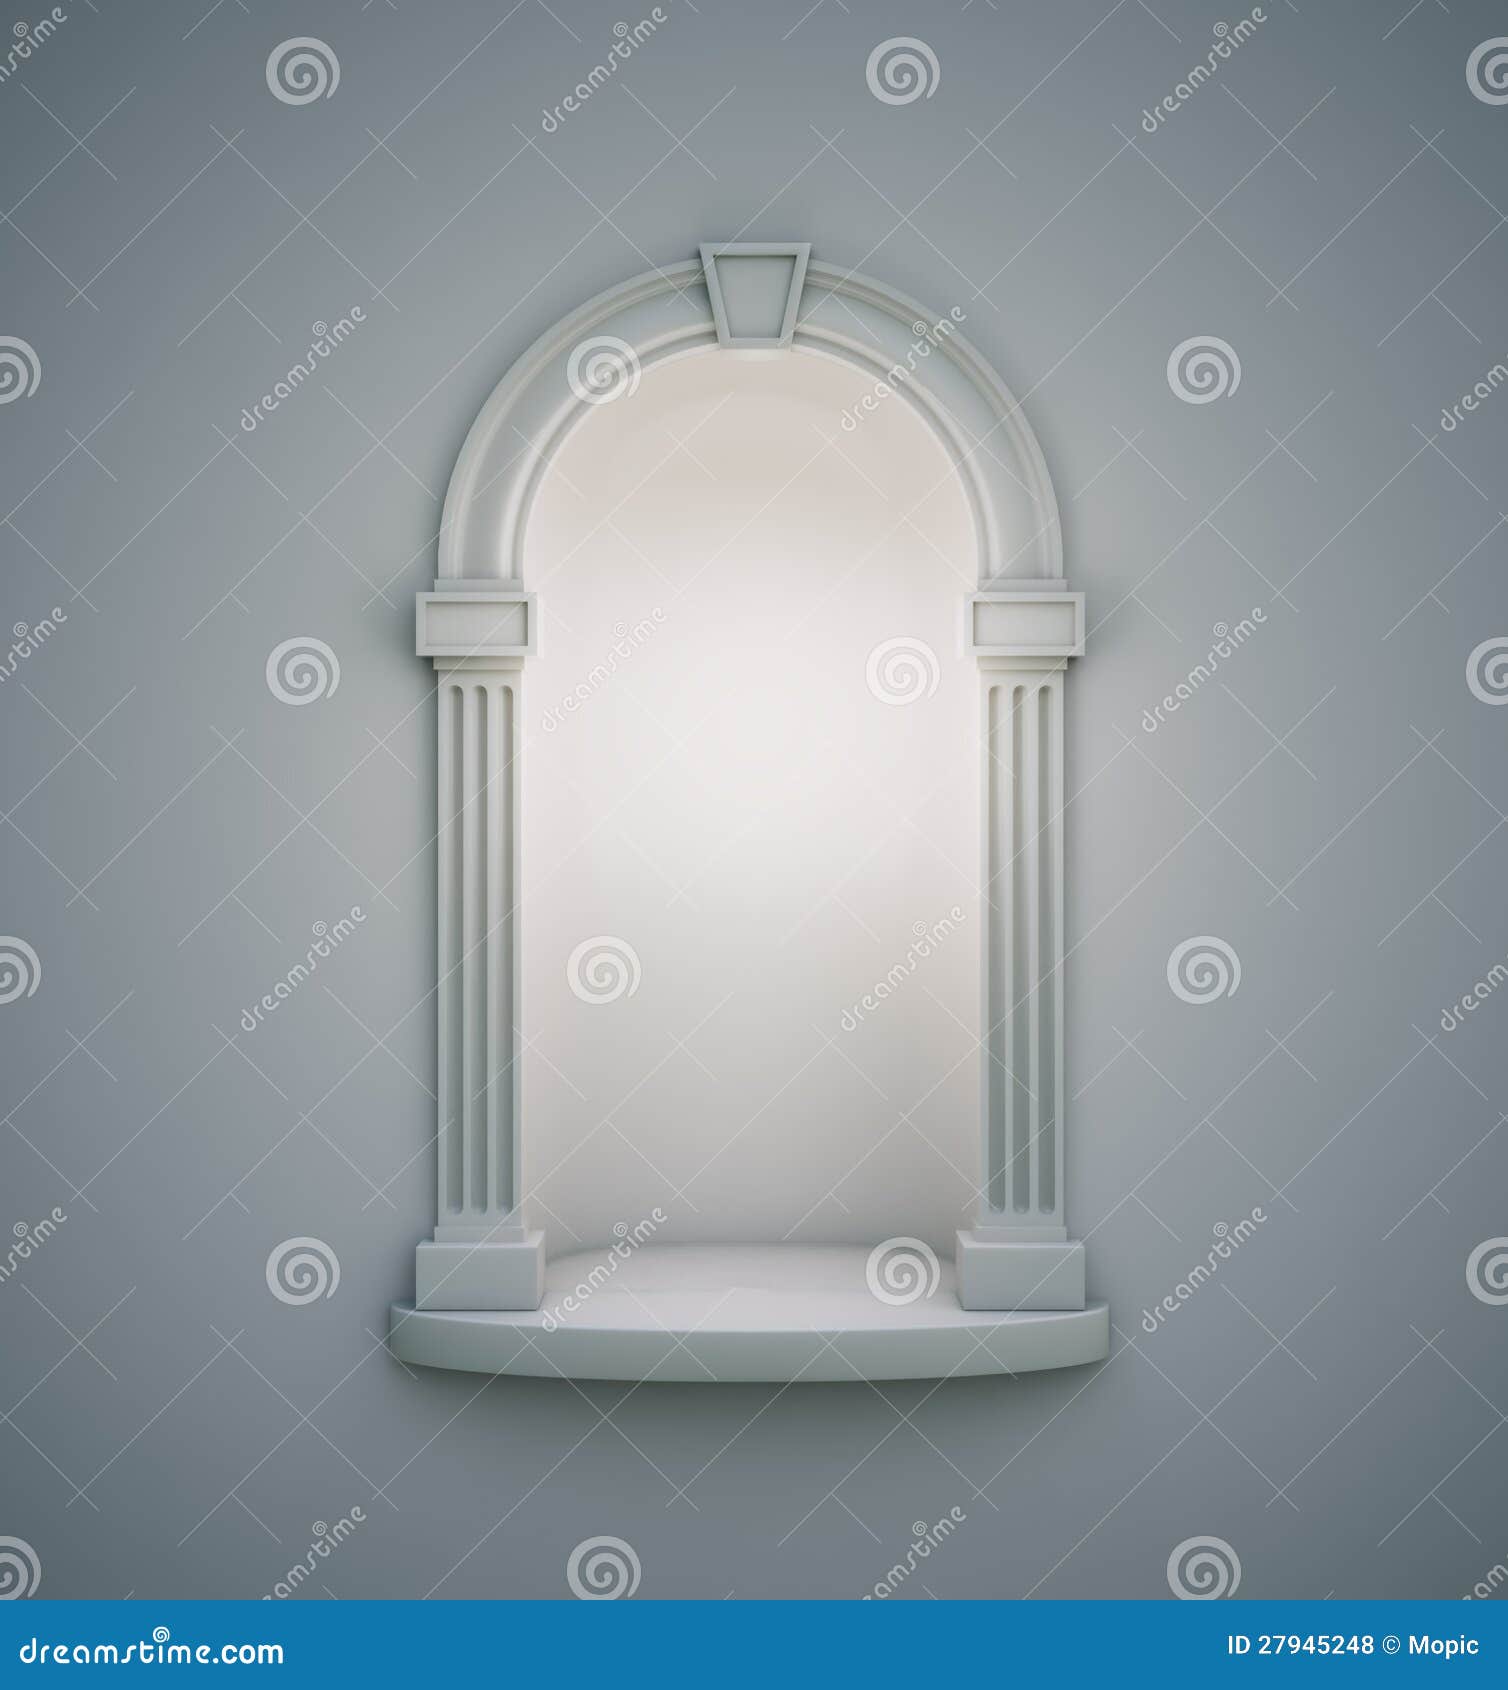 classical wall niche